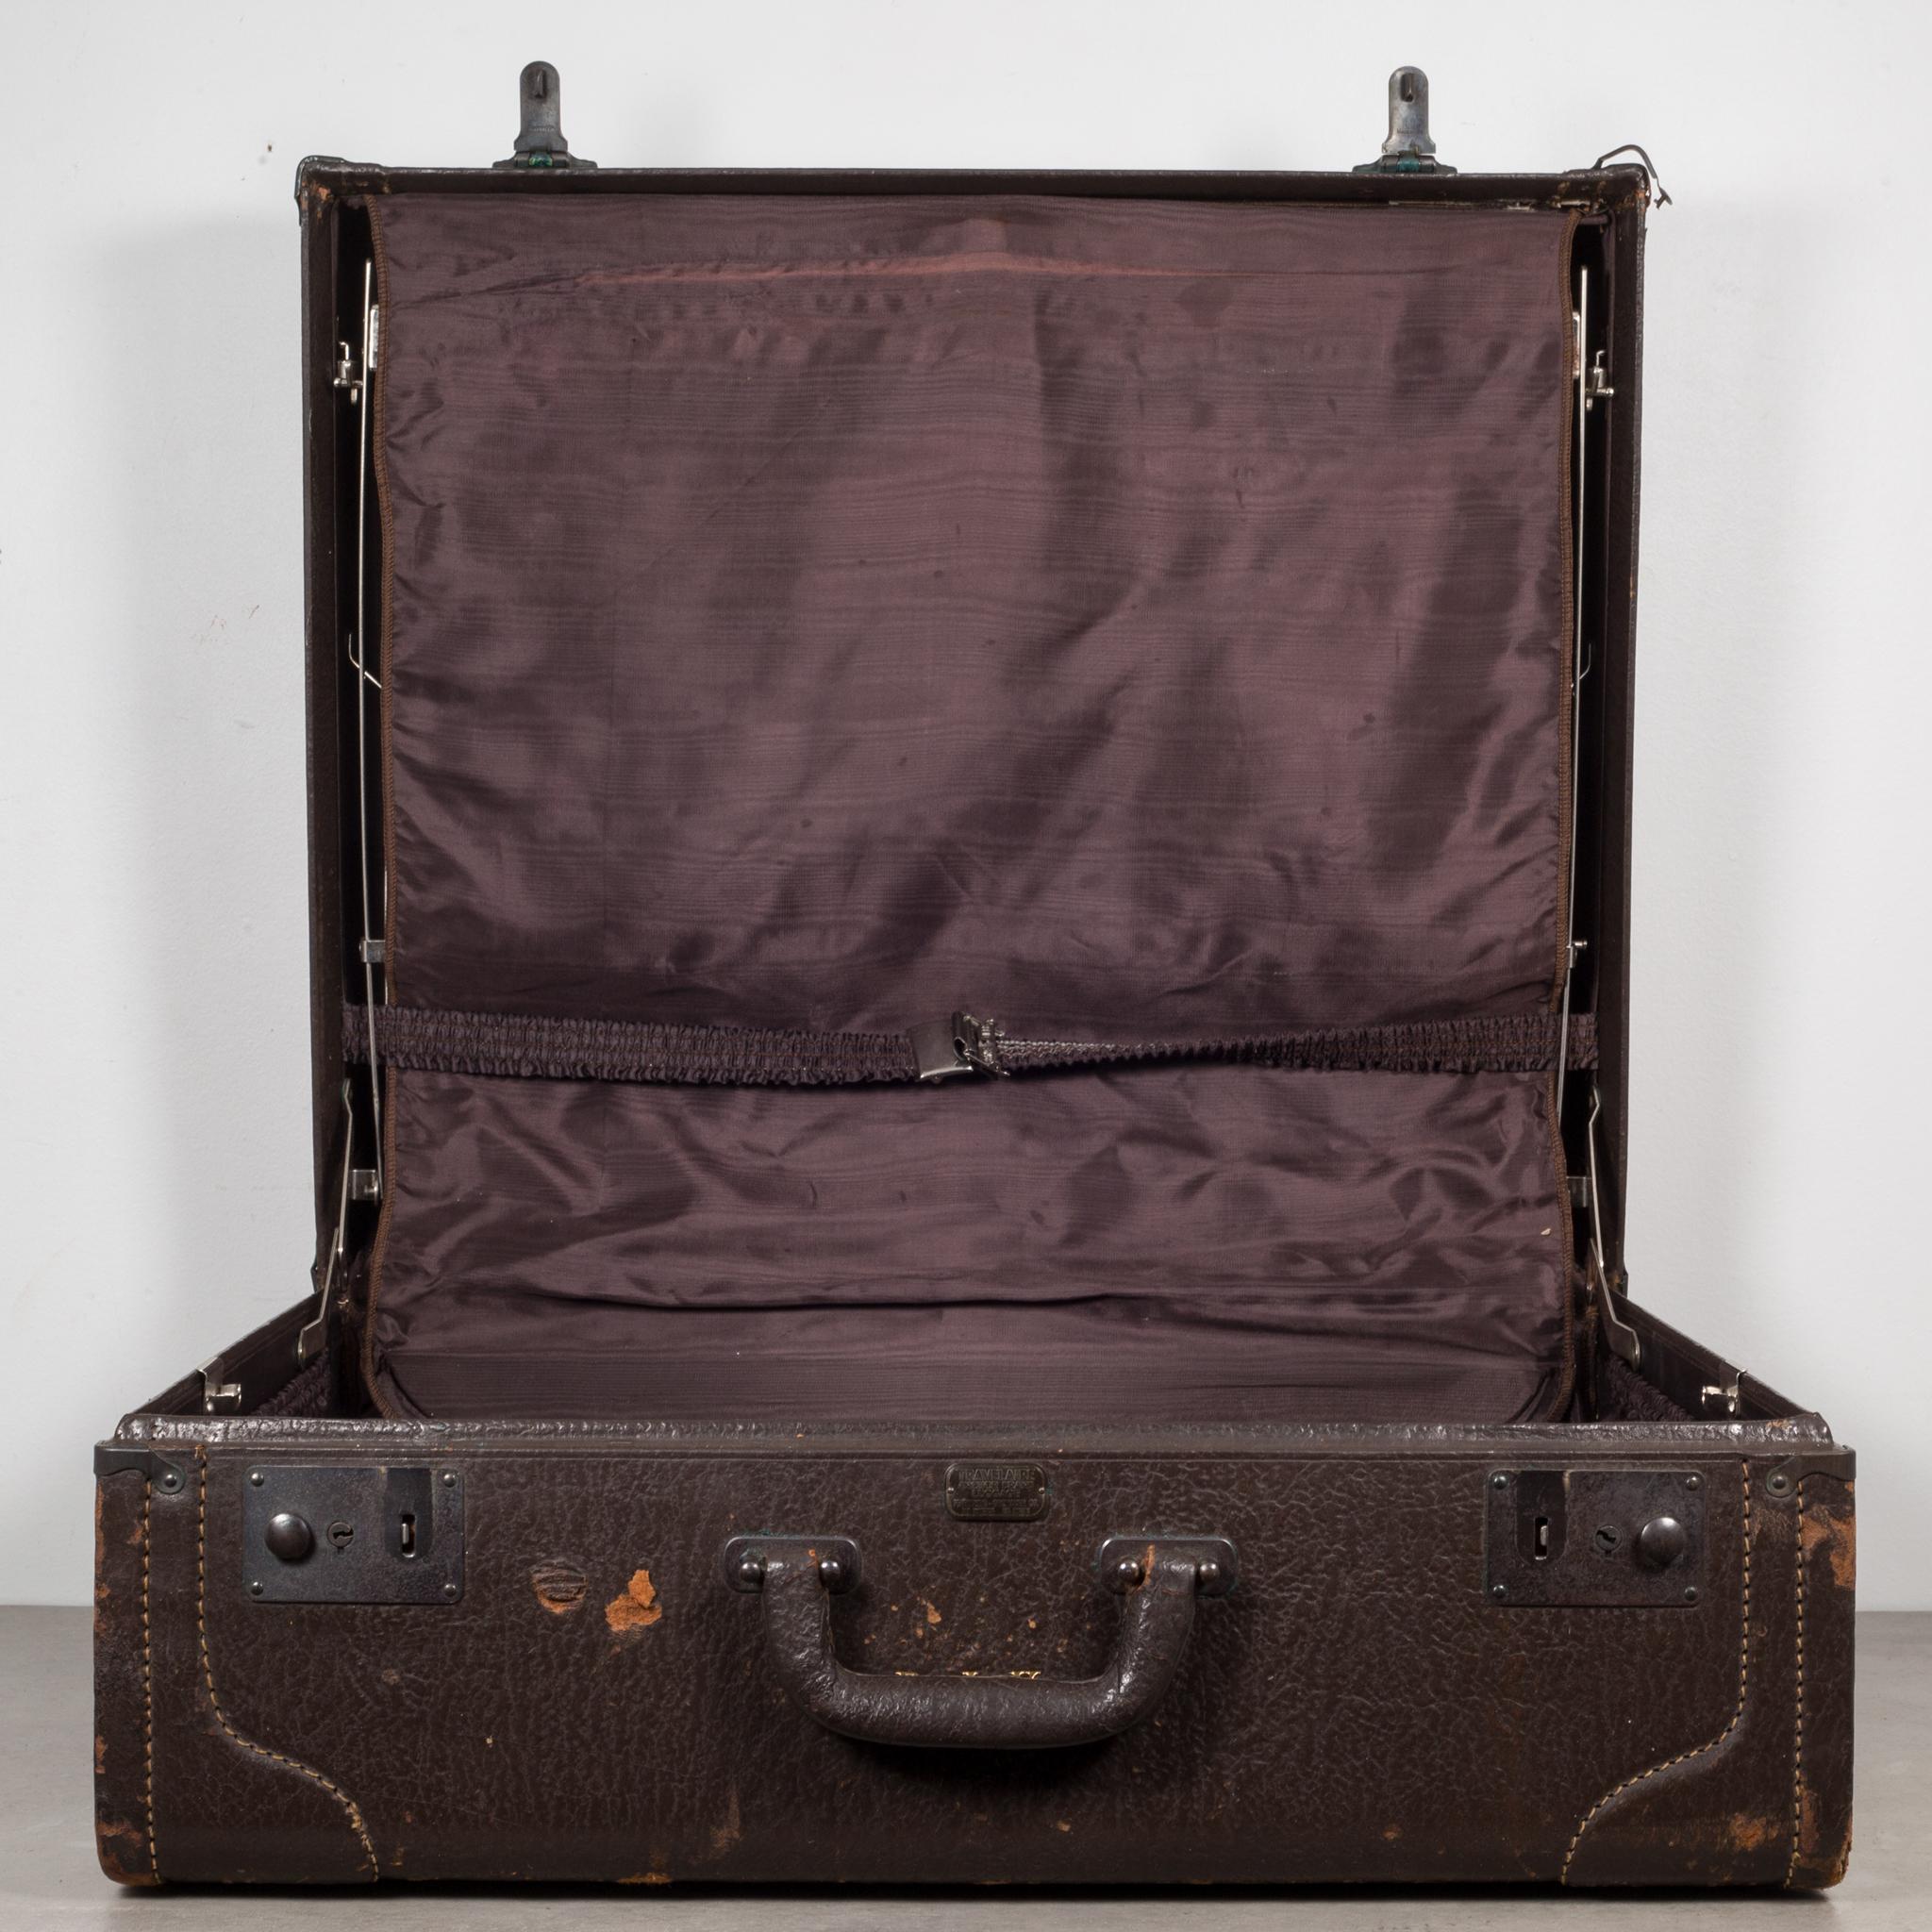 Metal Monogrammed Leather Luggage, circa 1940